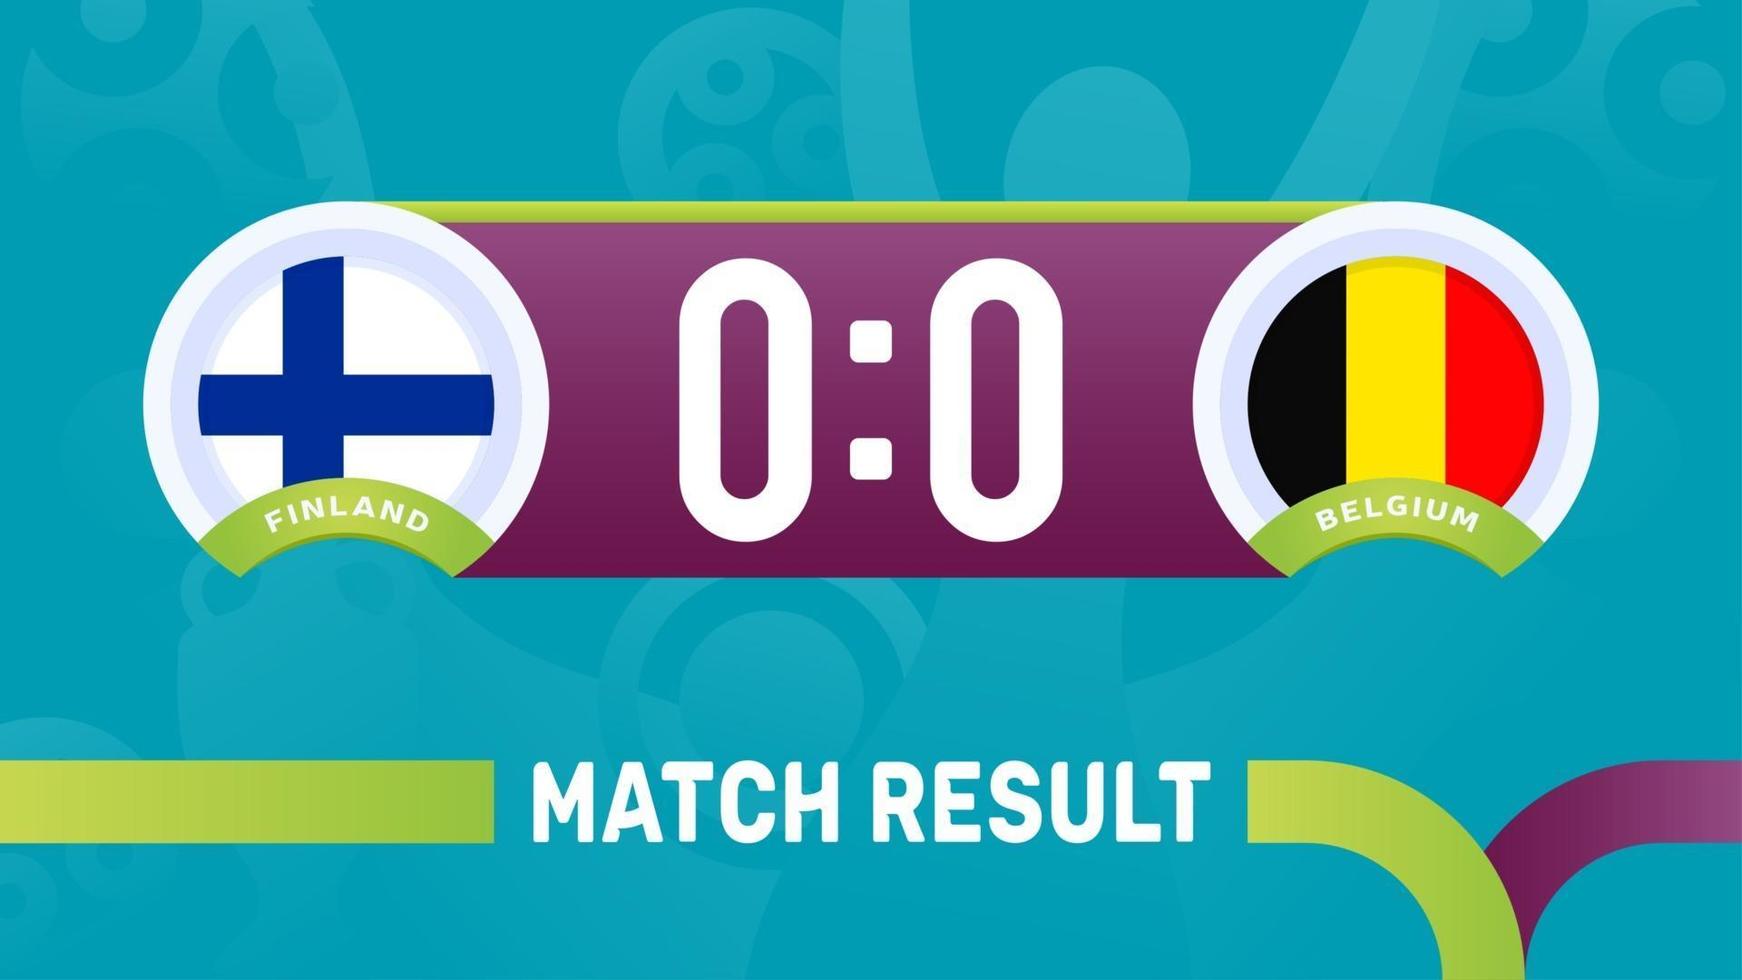 finland vs belgium match result, European Football Championship 2020 vector illustration. Football 2020 championship match versus teams intro sport background